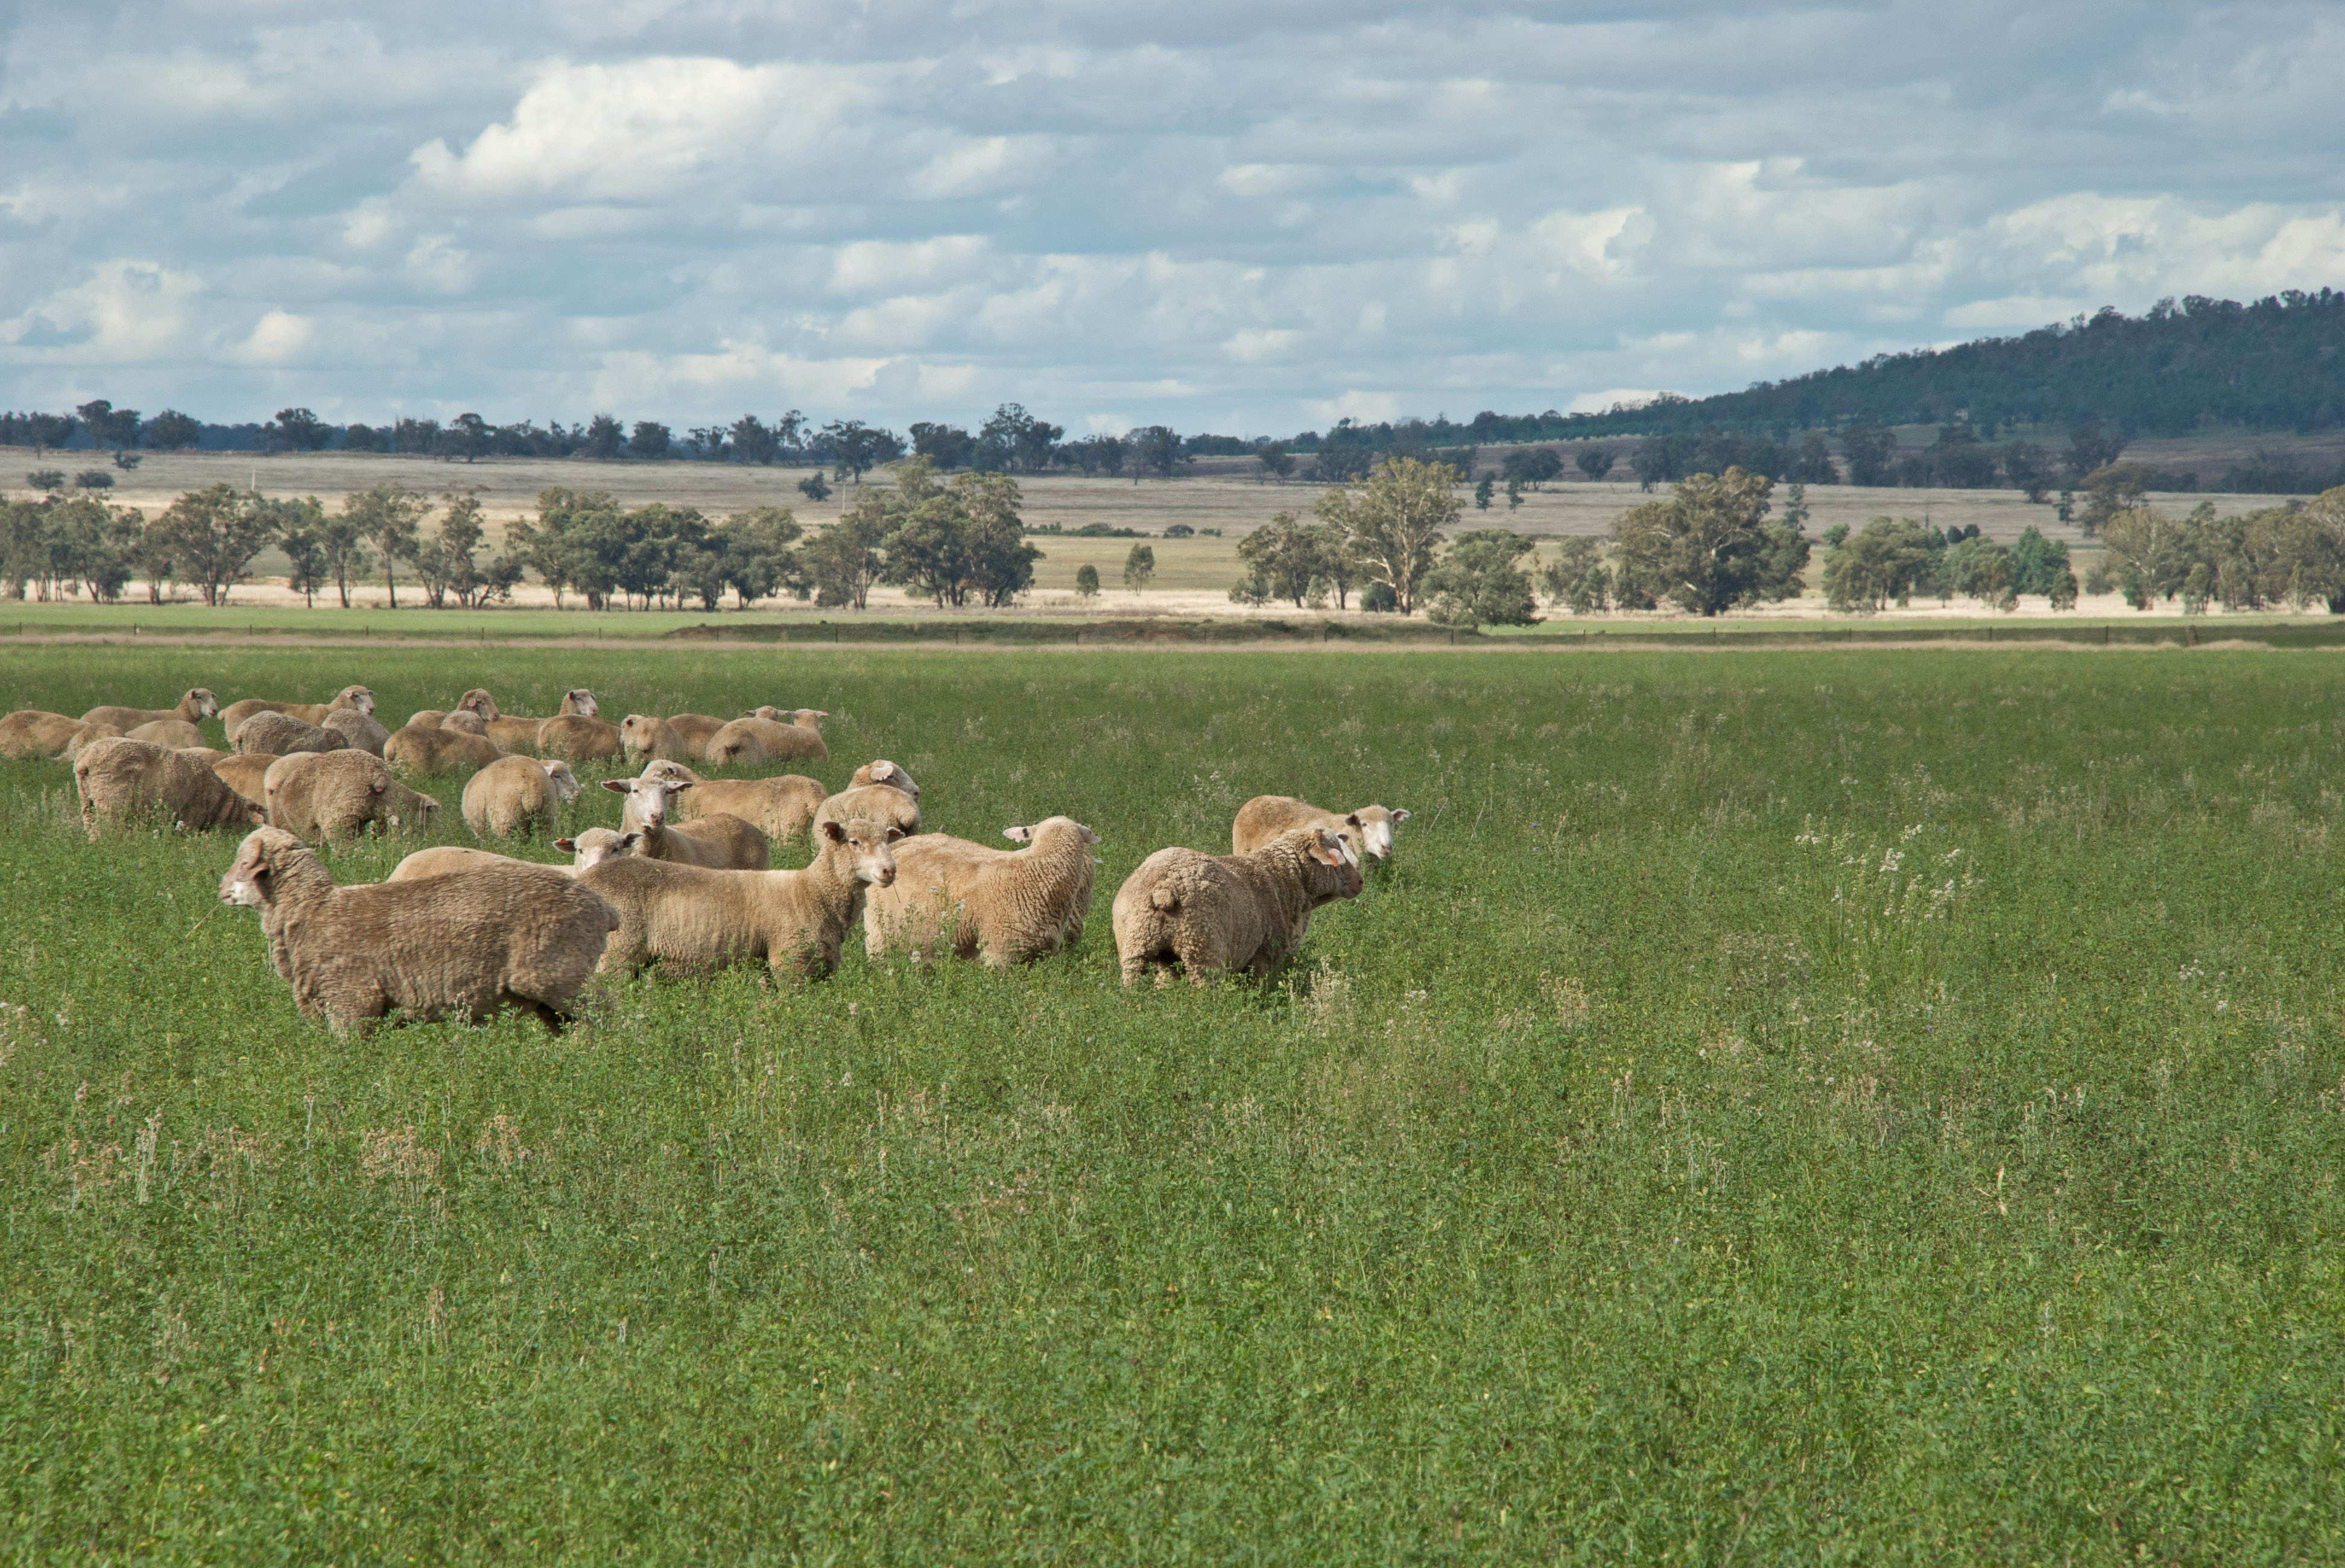 Sheep grazing photo